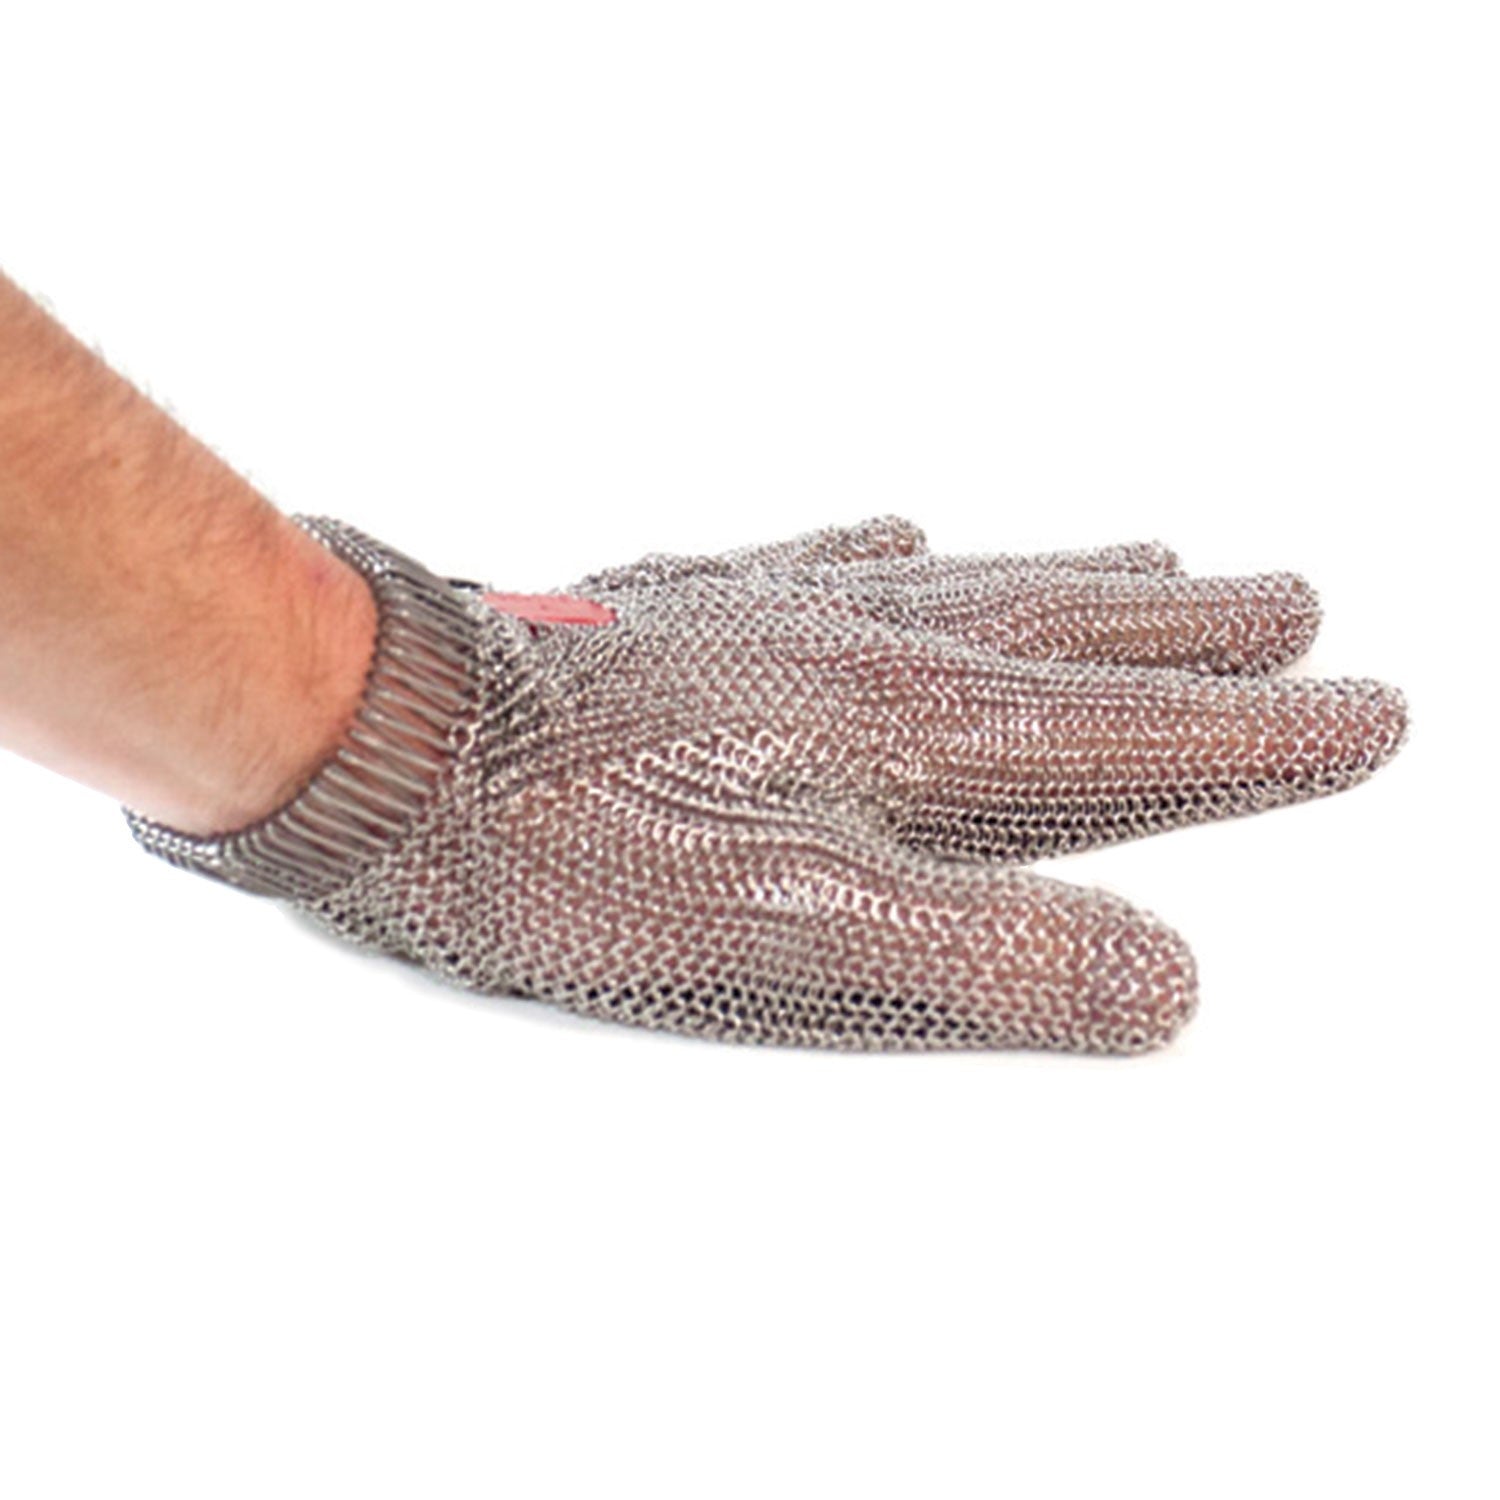 Stainless Steel Mesh Butcher Glove Spring Cuff - XLarge